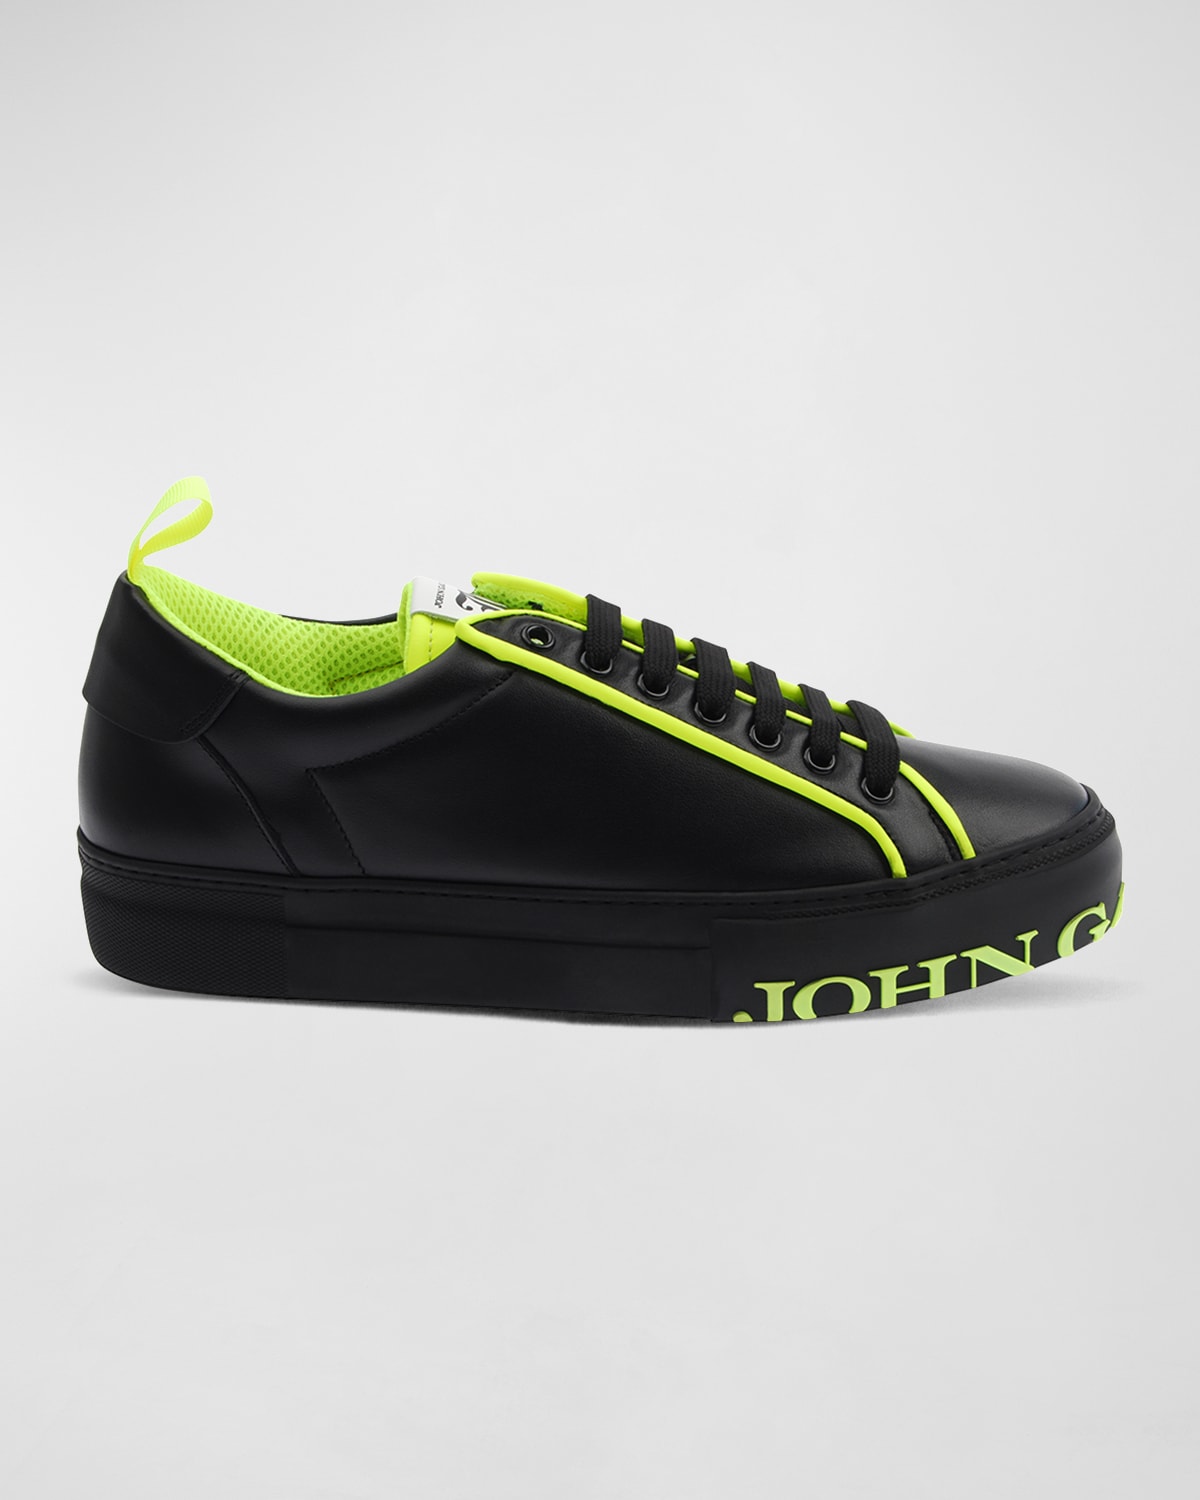 John Galliano Paris Men's Neon Logo Leather Low-Top Sneakers, Black